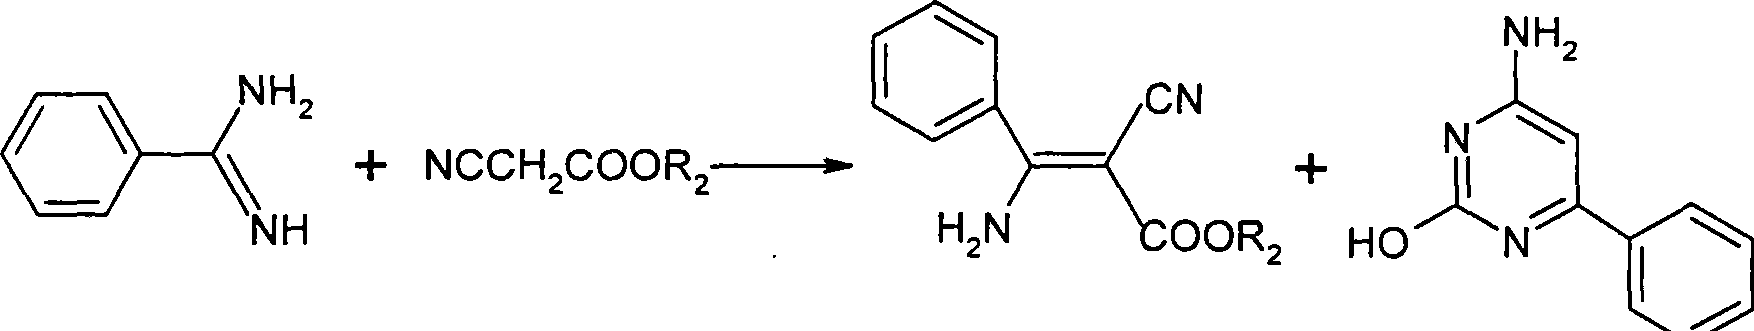 Method for preparing 2-cyano-3-amino acrylic ester derivates